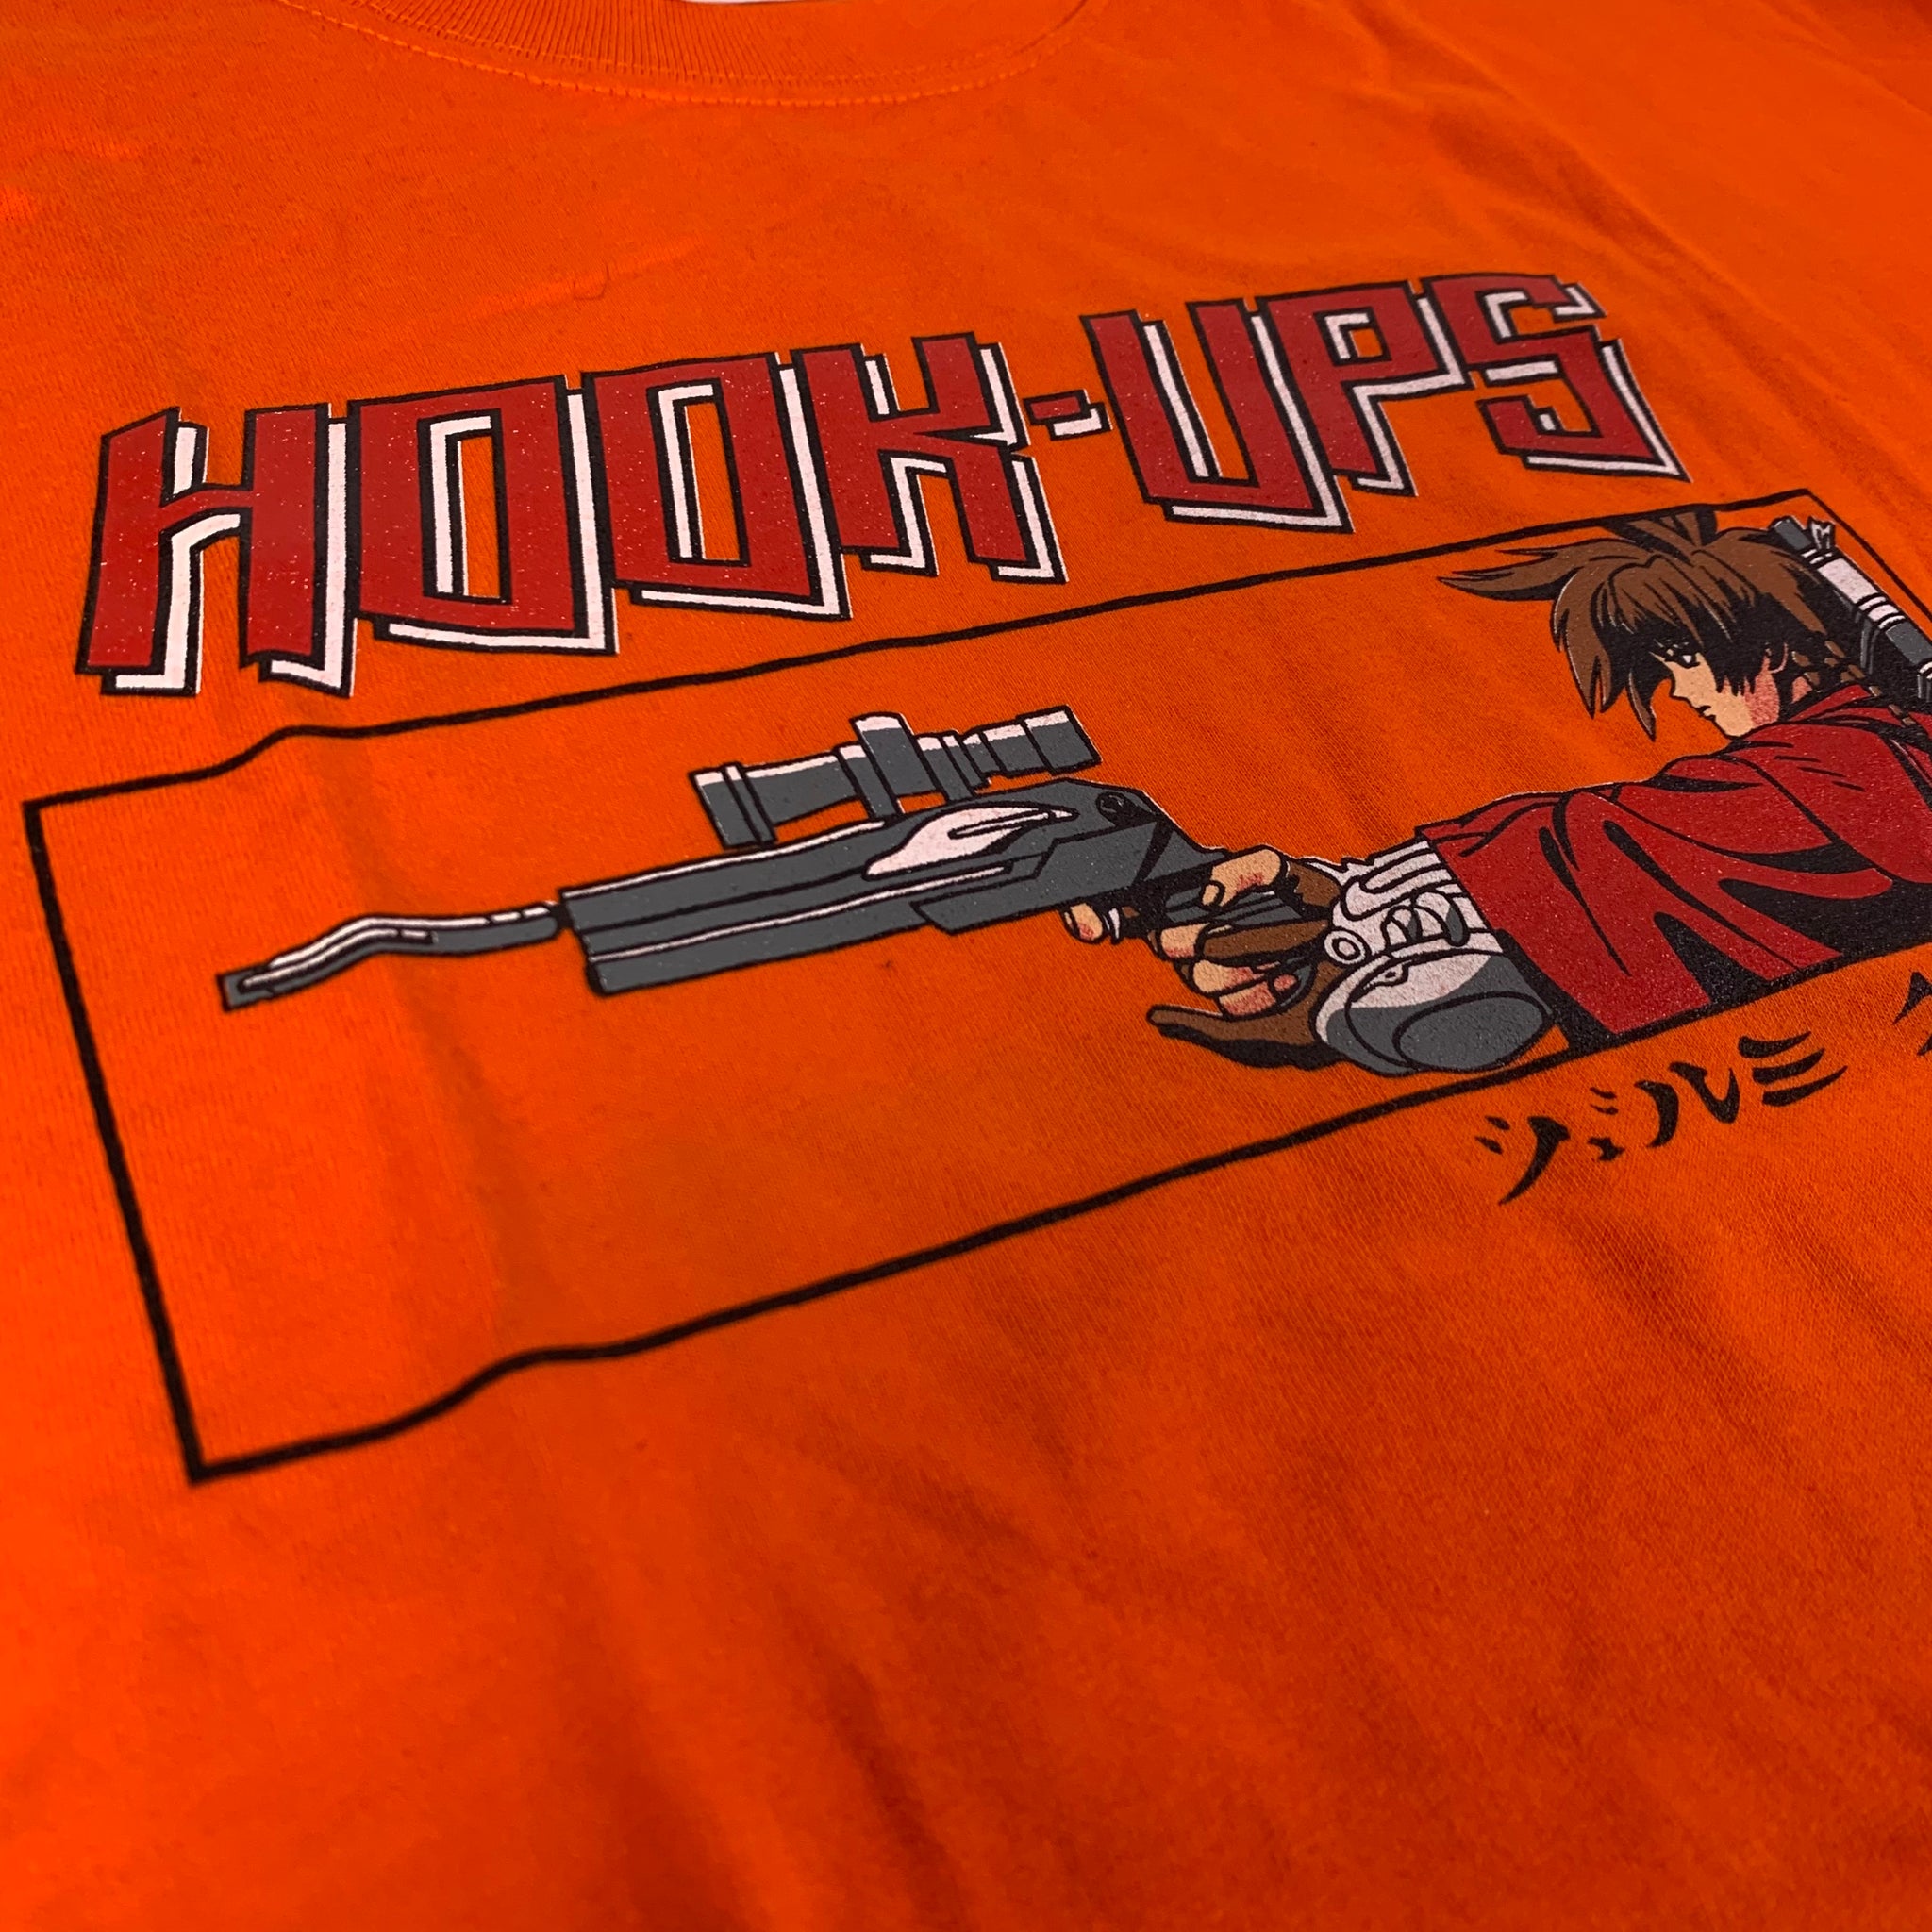 Vintage Hook-Ups Skateboards T-shirt Clothing Original Rare Made